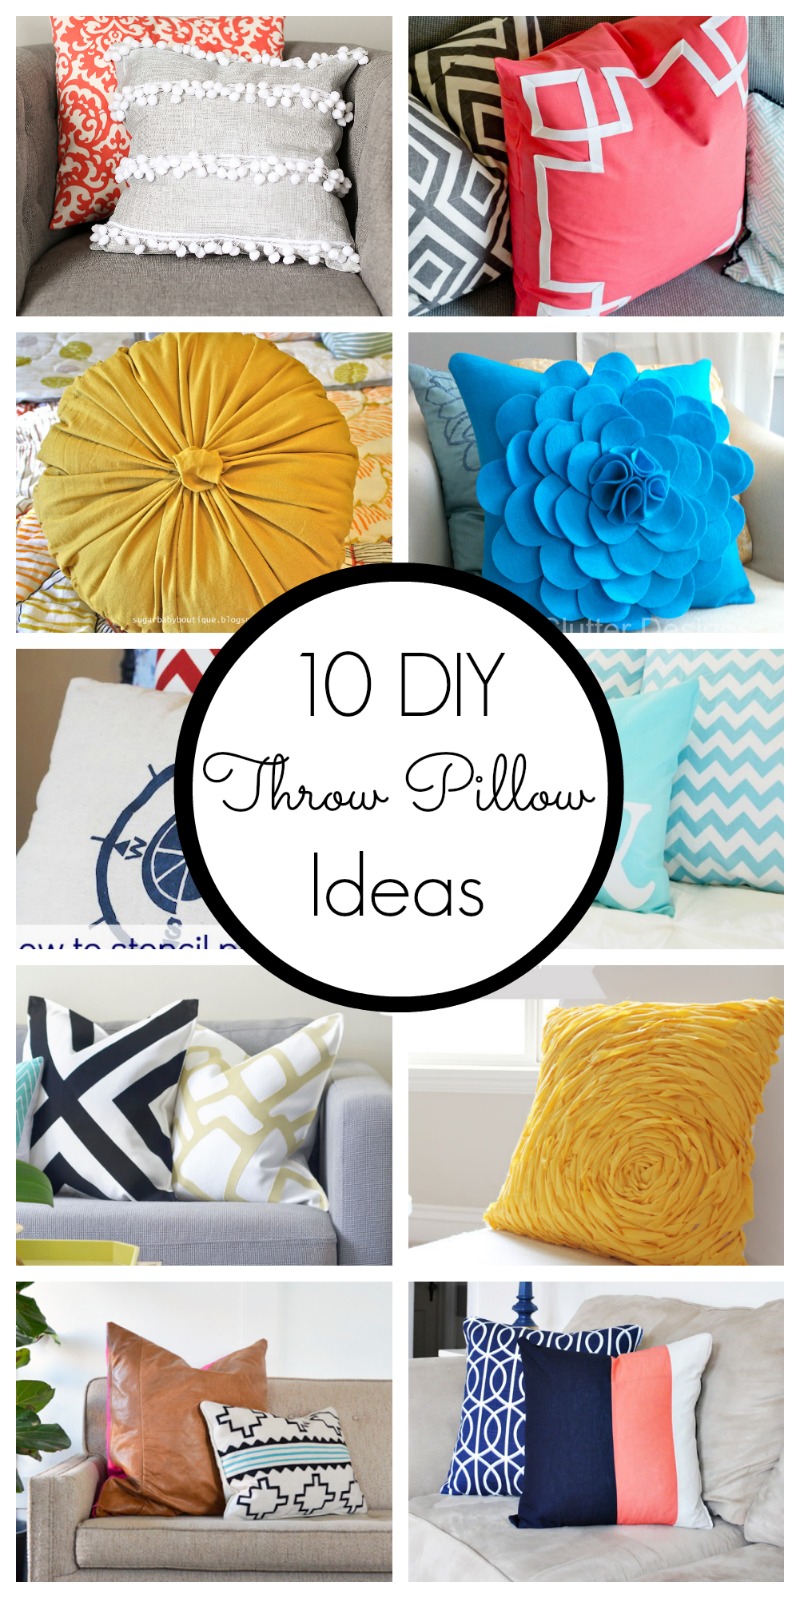 10 DIY Throw Pillow Ideas
